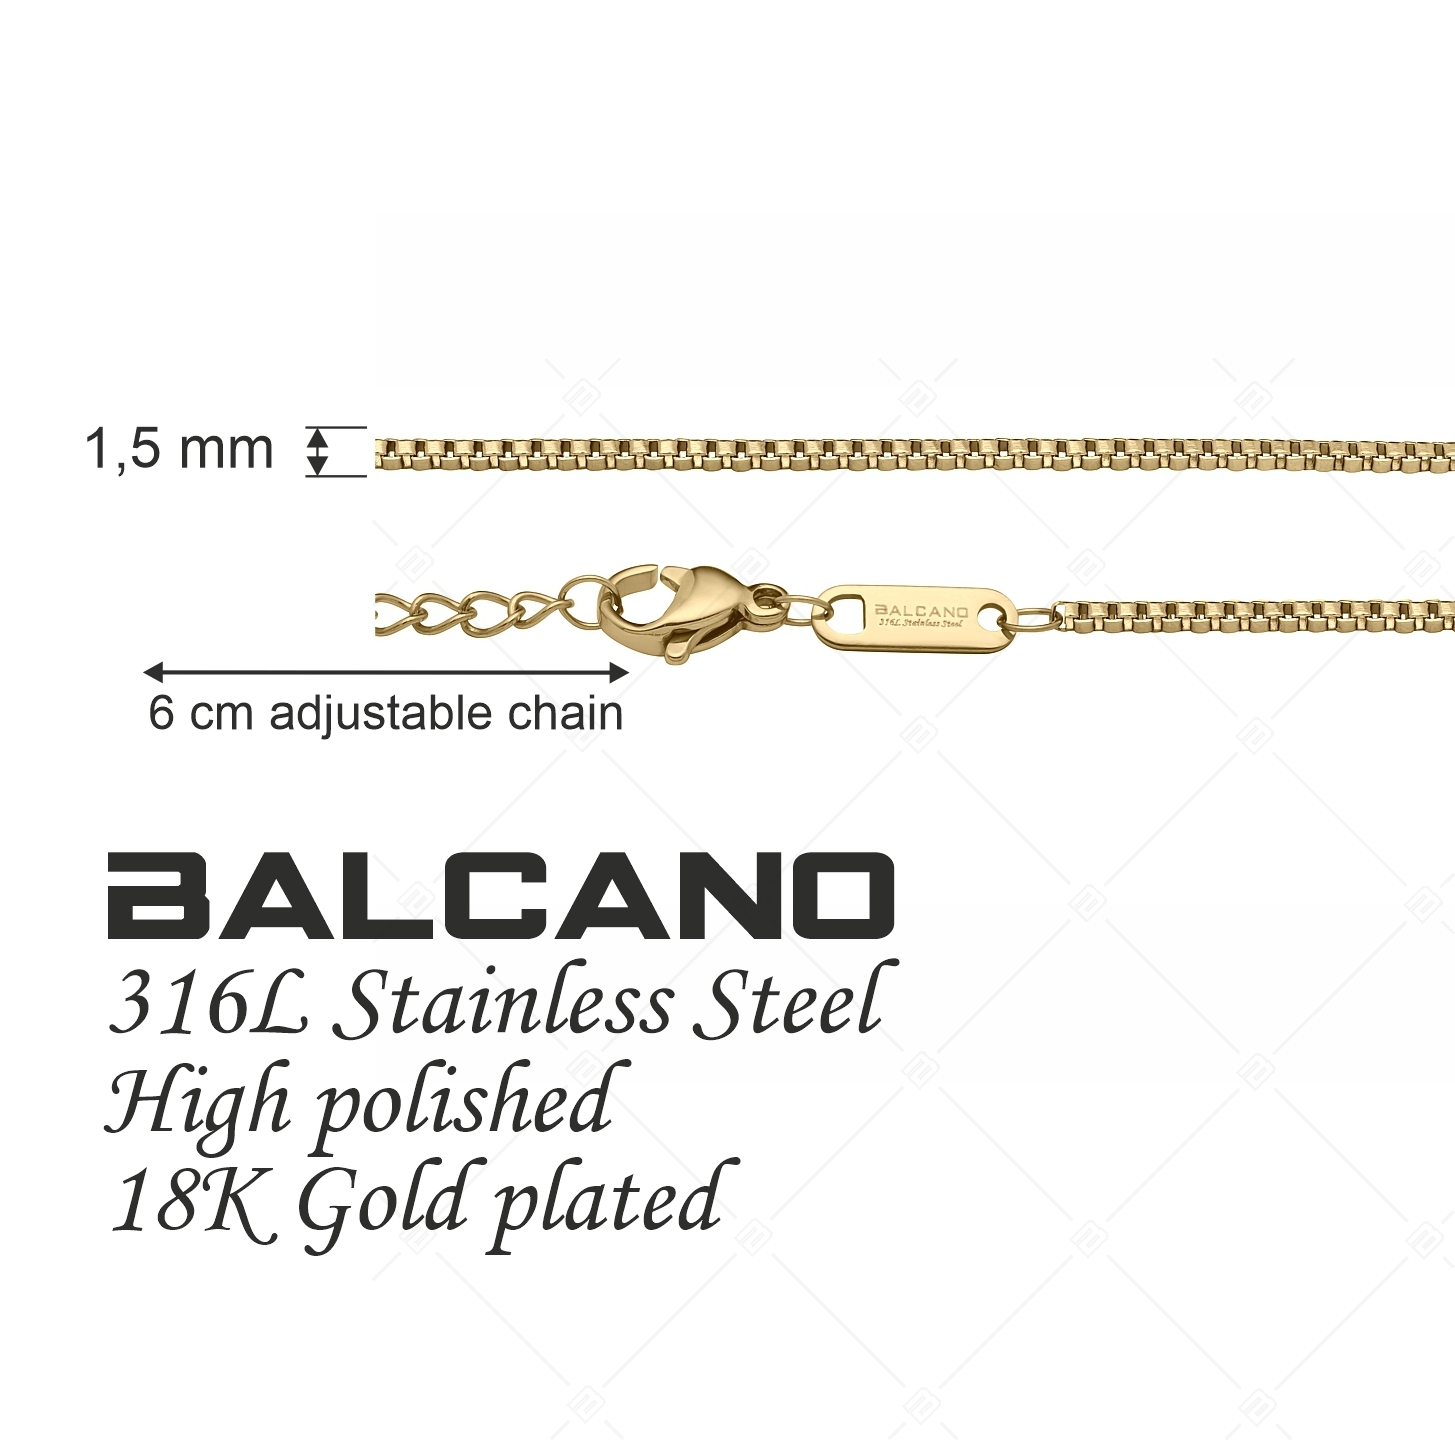 BALCANO - Venetian / Edelstahl Venezianer Kette-Fußkette mit 18K Gold Beschichtung - 1,5 mm (751292BC88)